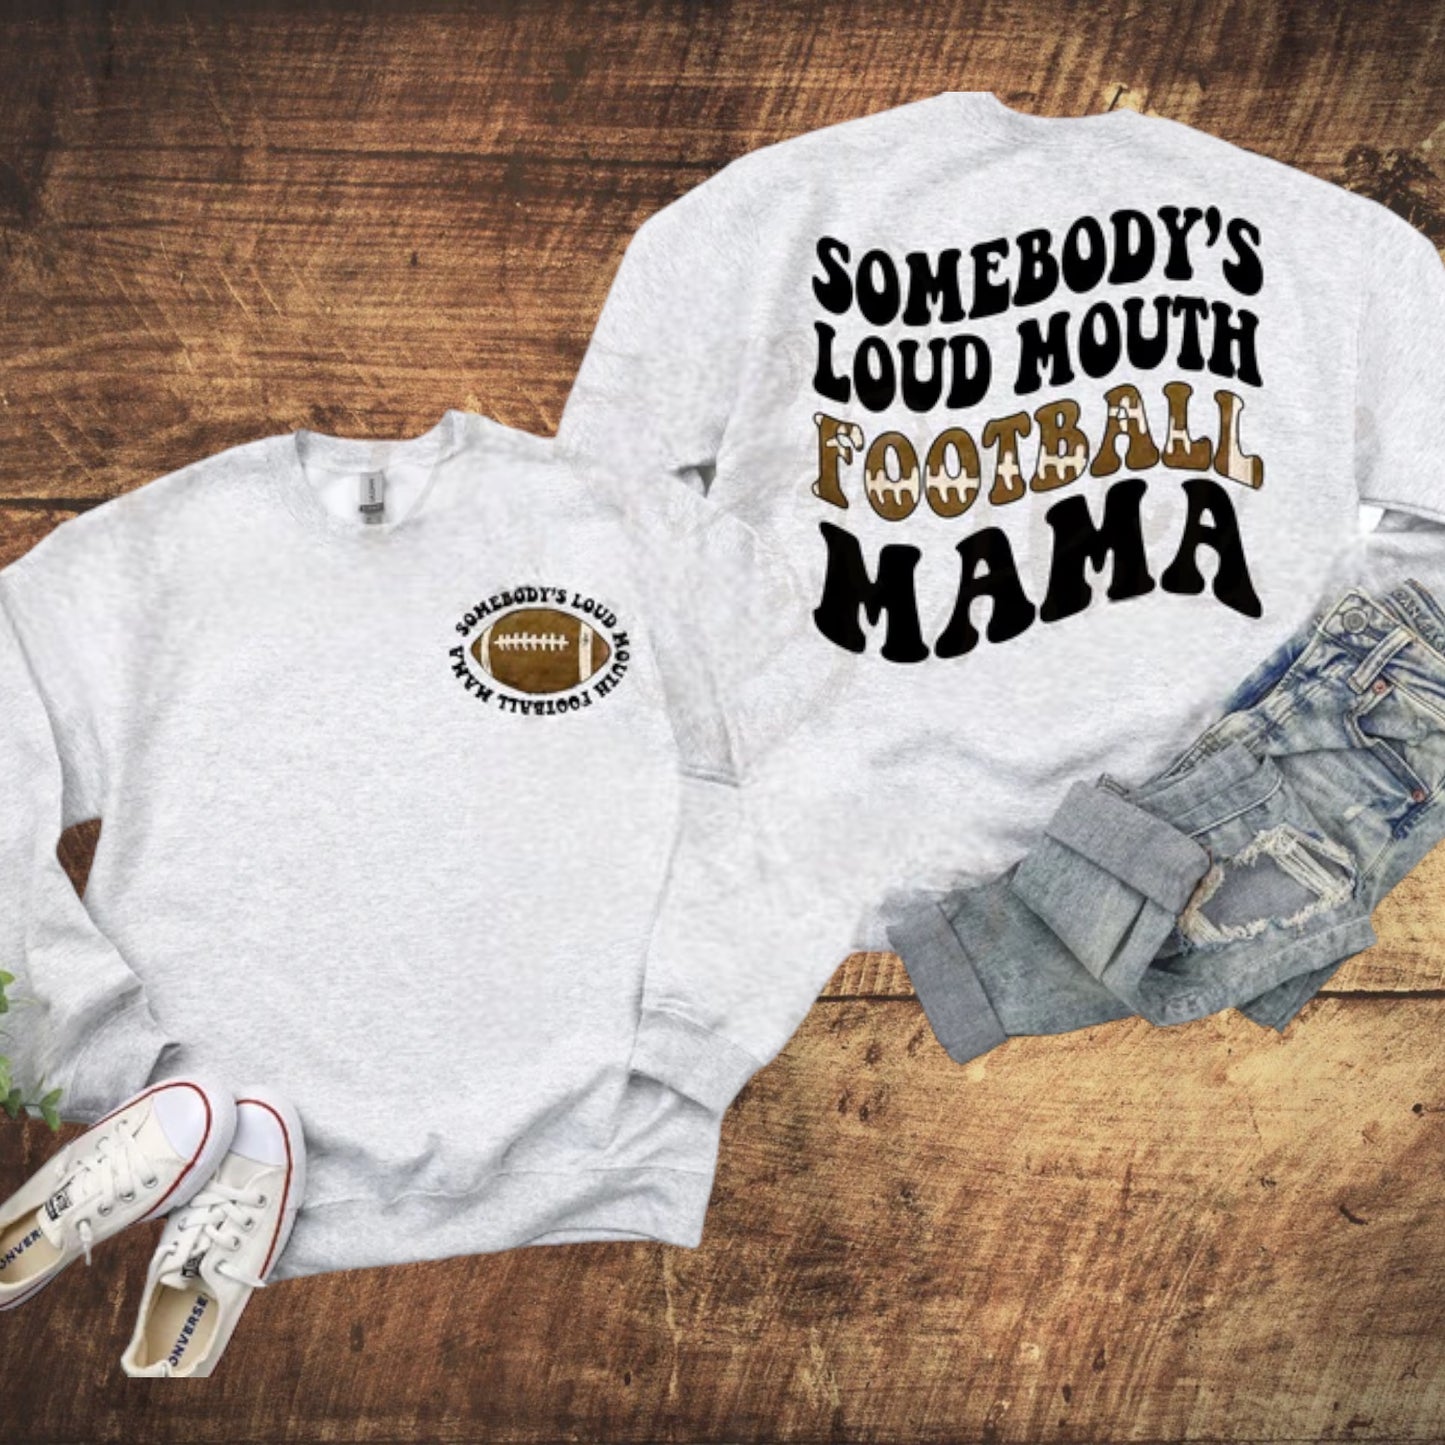 Loudmouth Football Mama Crewneck Sweatshirt or Tee